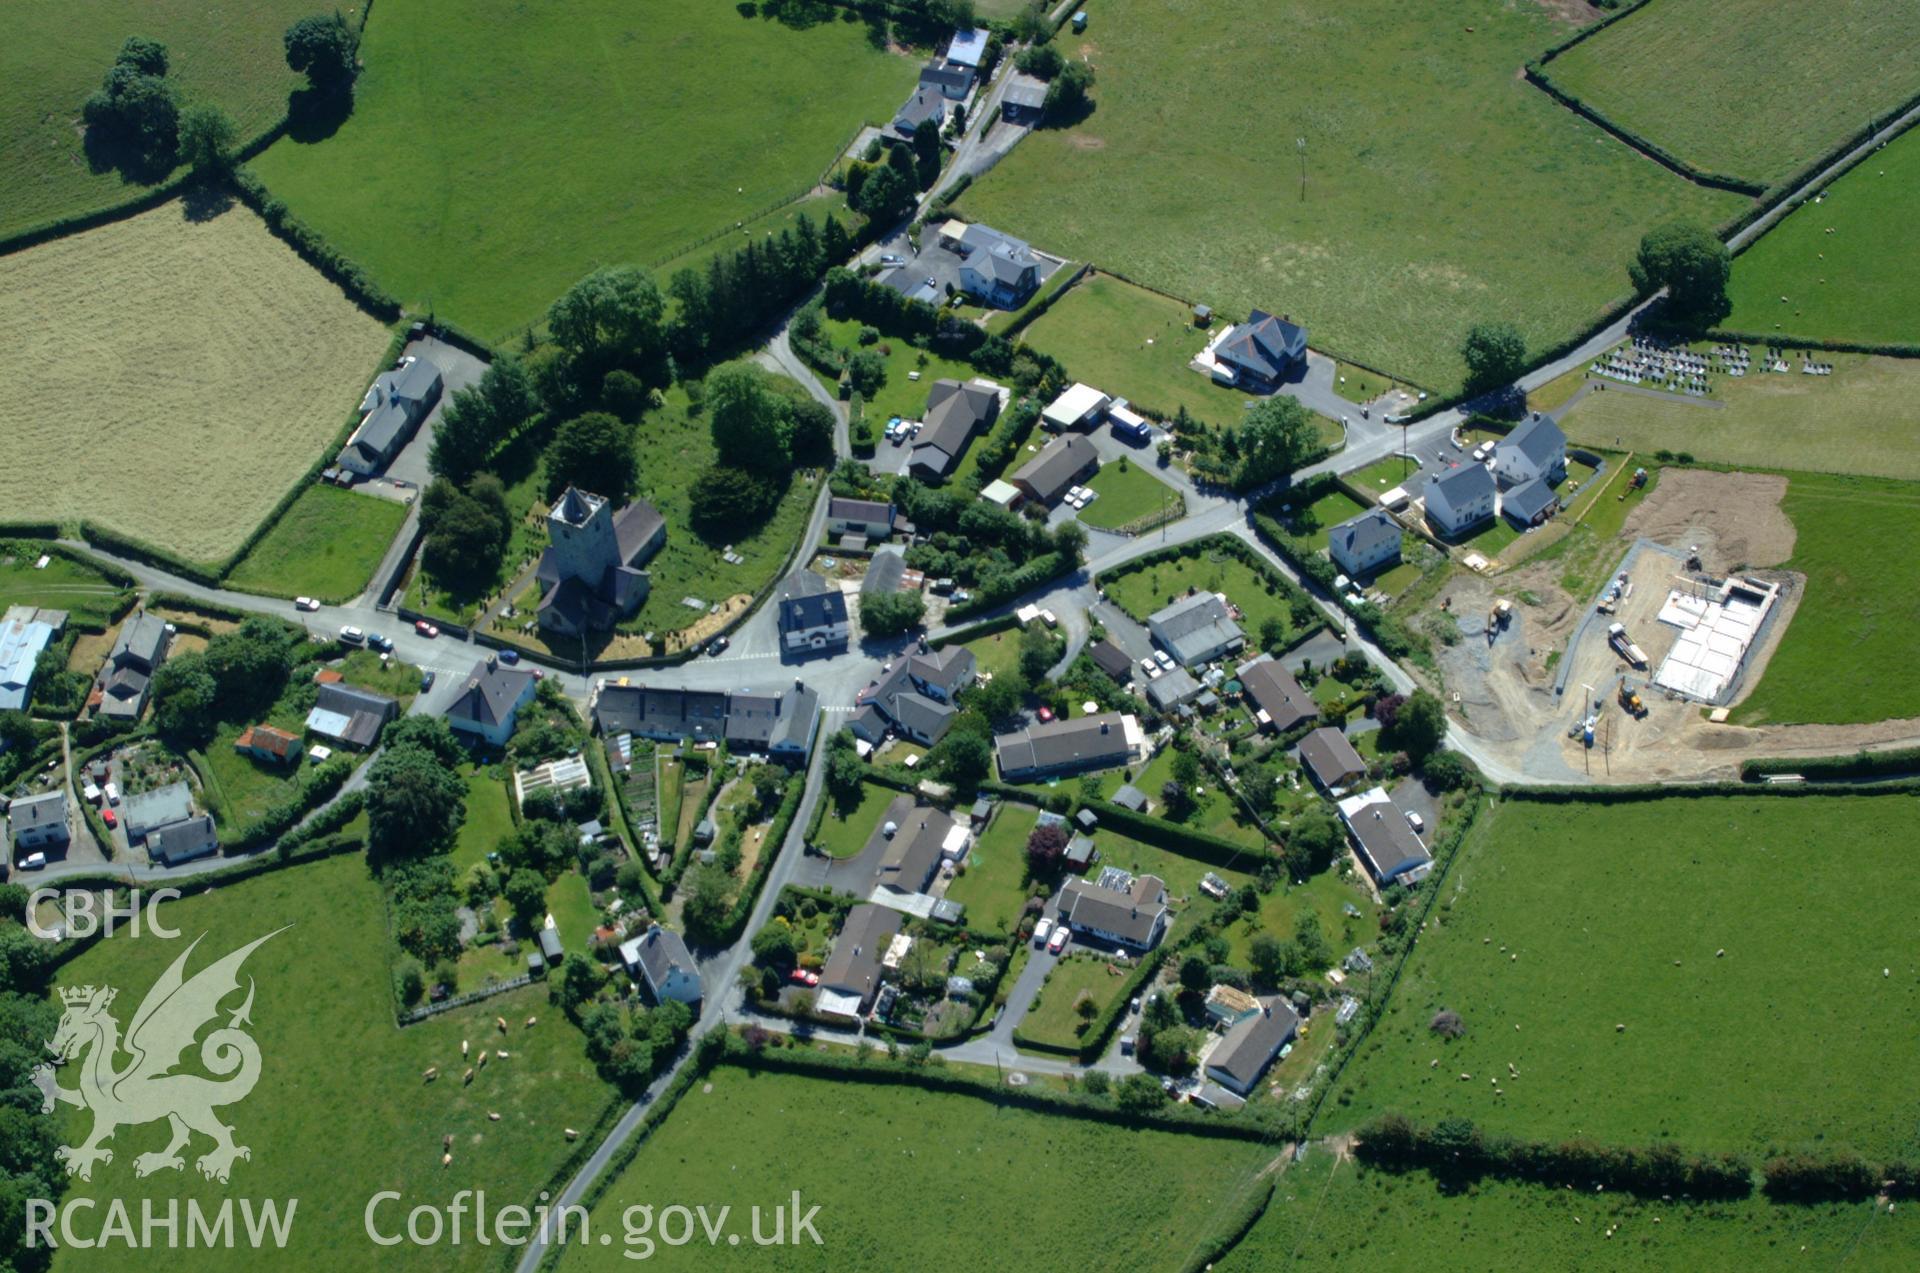 RCAHMW colour oblique aerial photograph of Llanfihangel-y-creuddyn taken on 14/06/2004 by Toby Driver